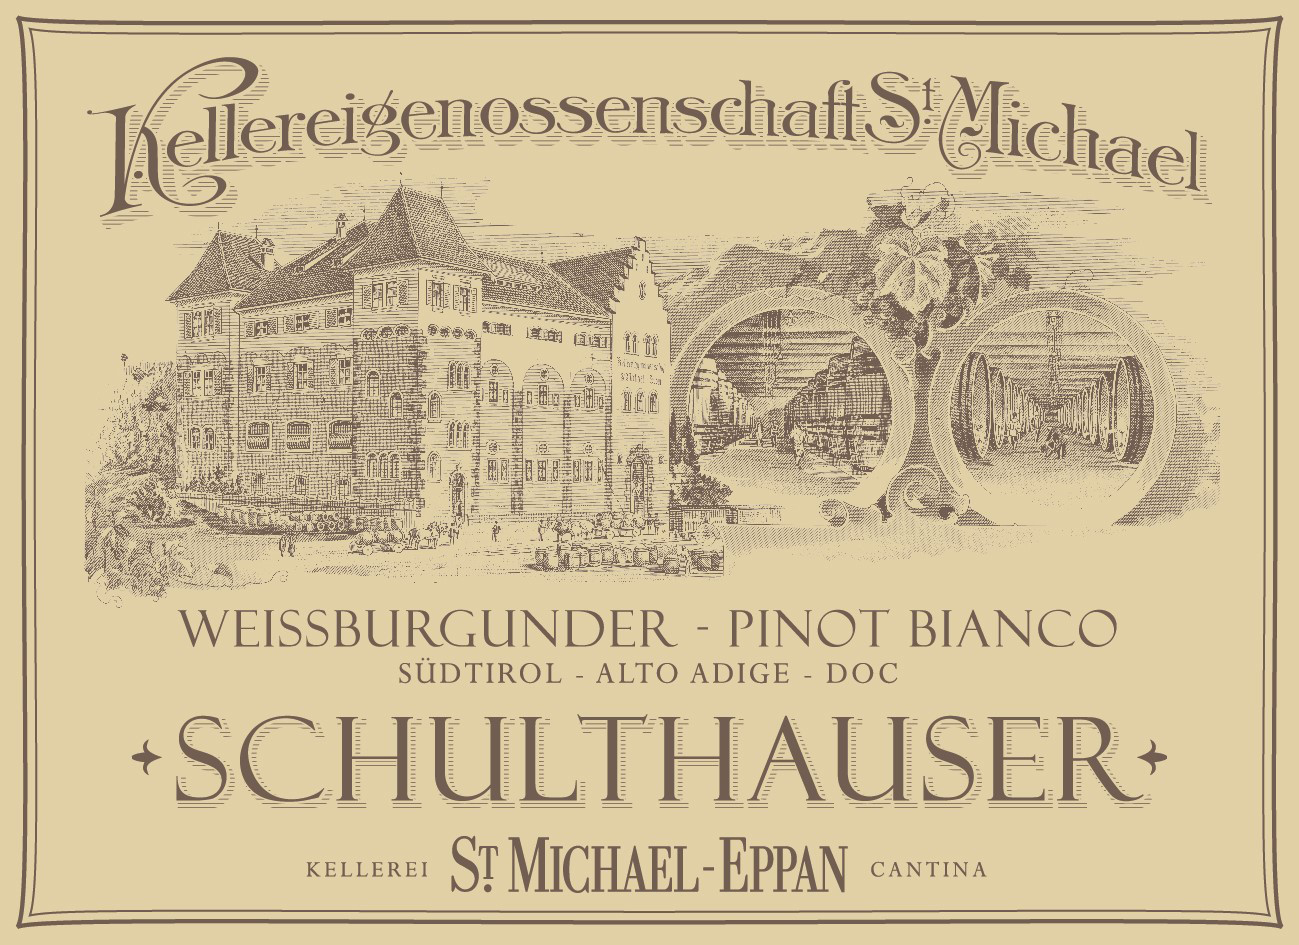 St. Michael-Eppan - Schulthauser - Pinot Bianco label